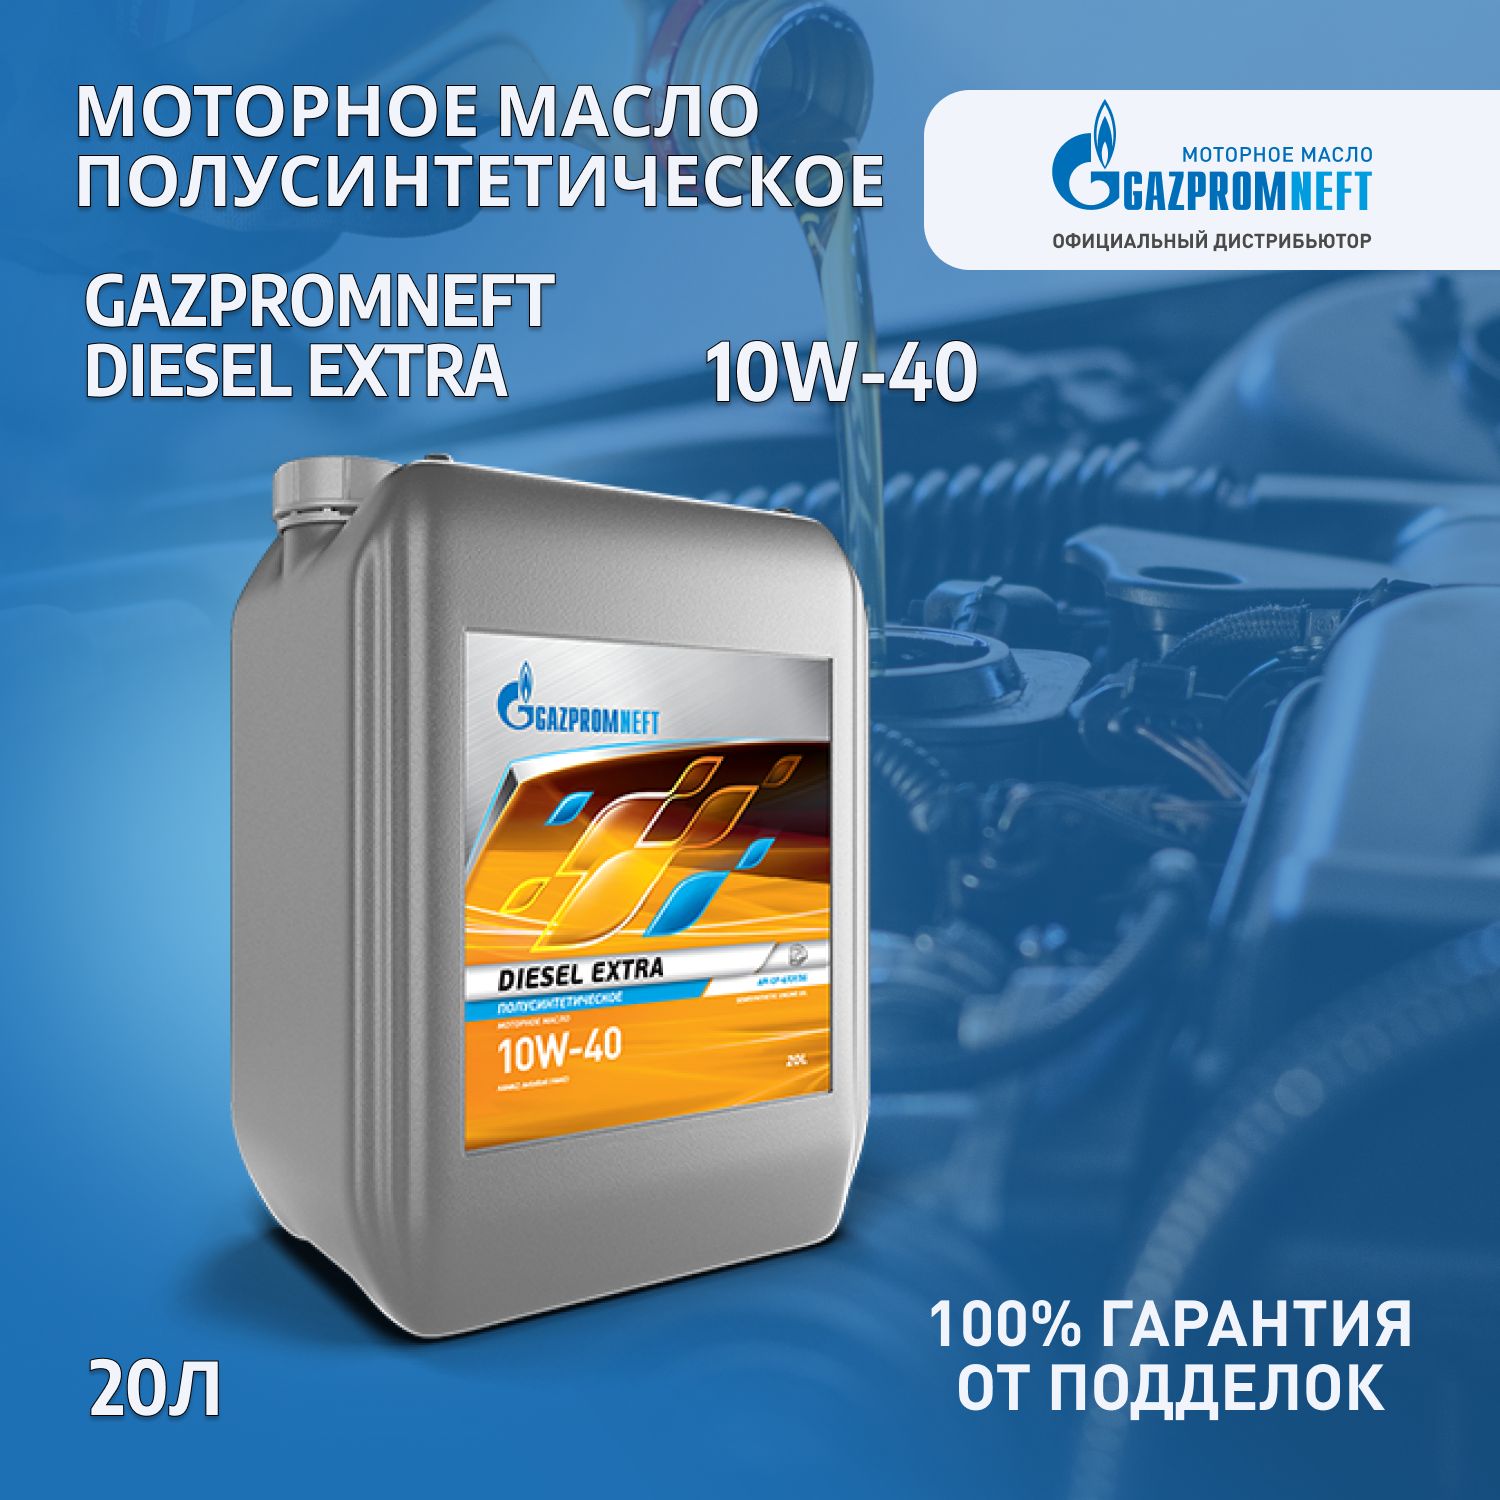 Gazpromneft Diesel Ultra 10w-40, 20л. Трансмиссионное масло Газпромнефть 85 w 190. Масло Gazpromneft reductor CLP-220 (10л).